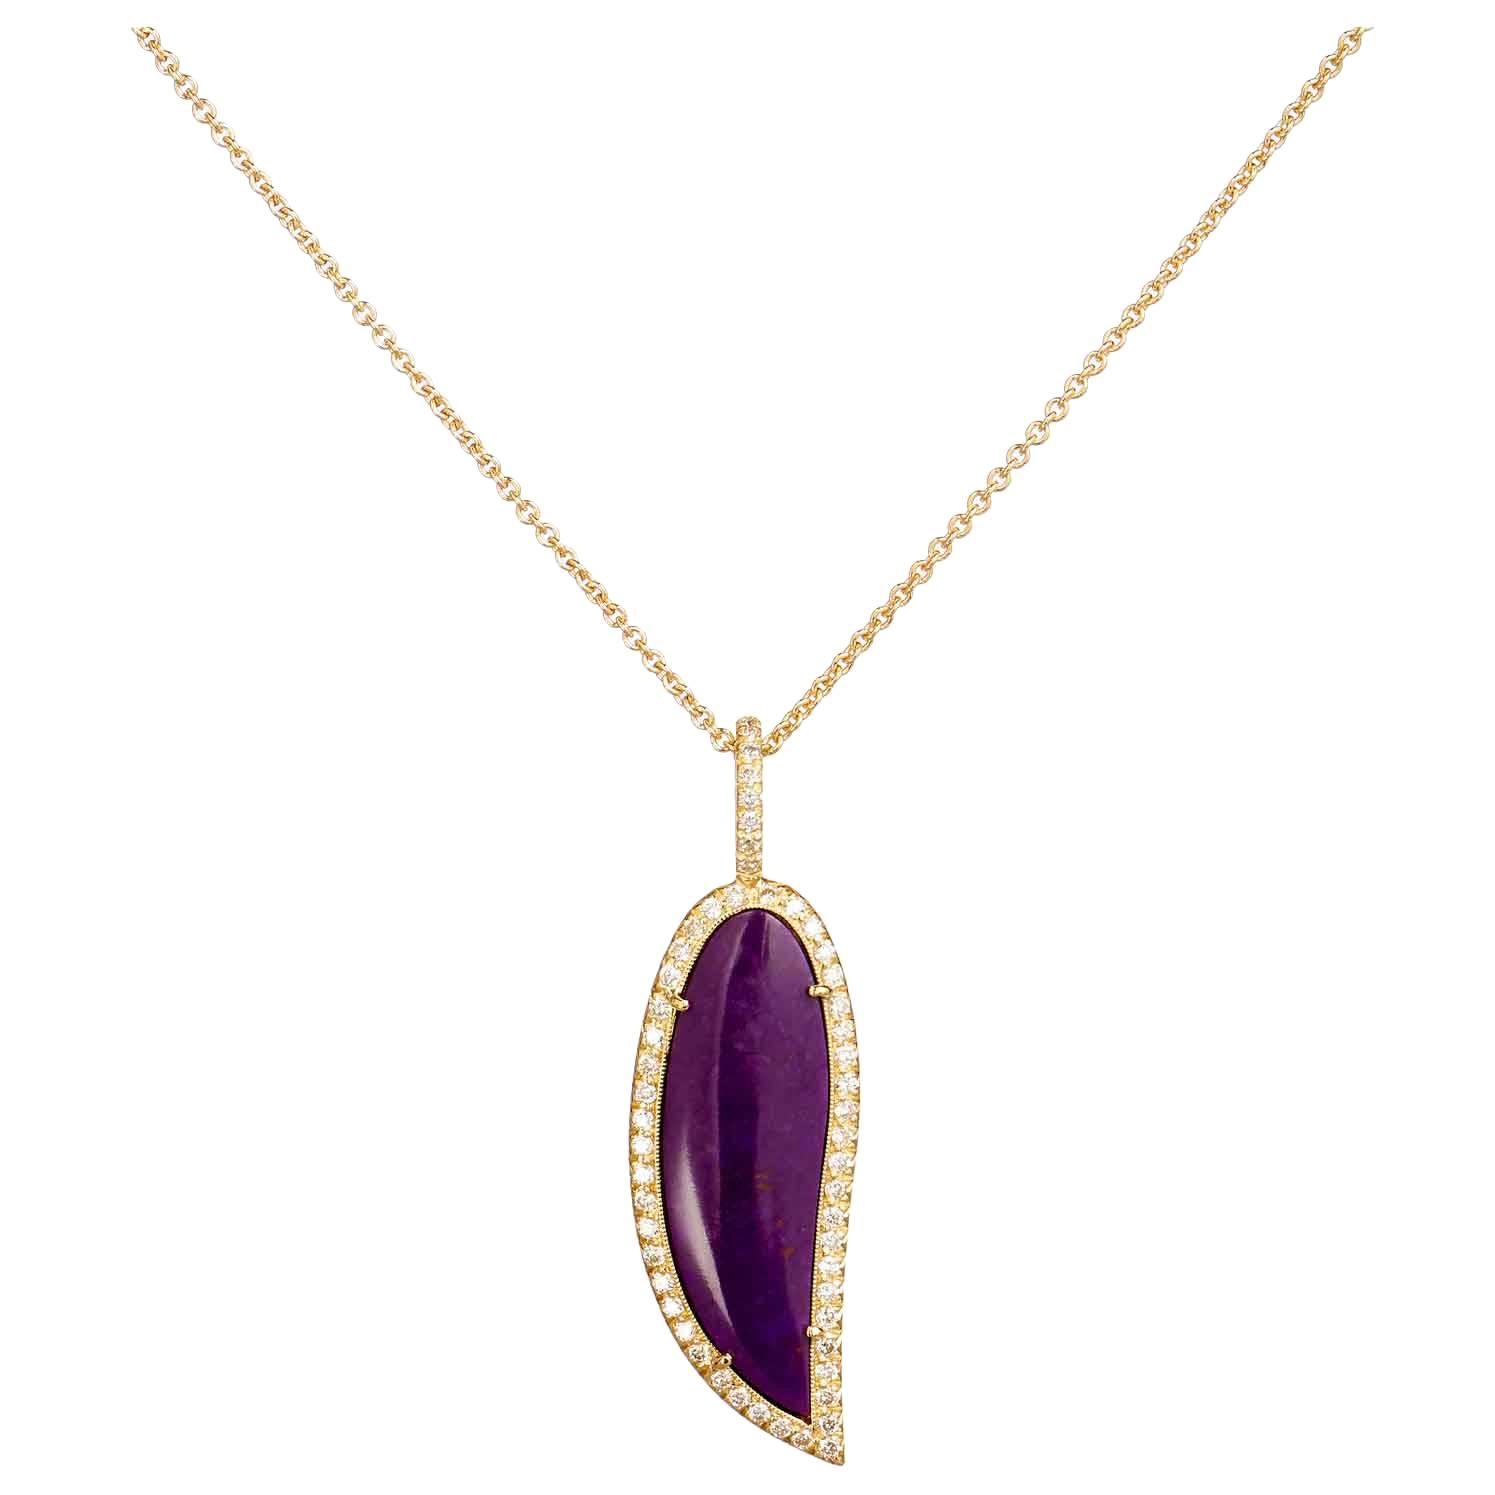 5.41 Carat Purple Sugilite Pendant Surrounded by Diamonds Set in 18 Karat Gold